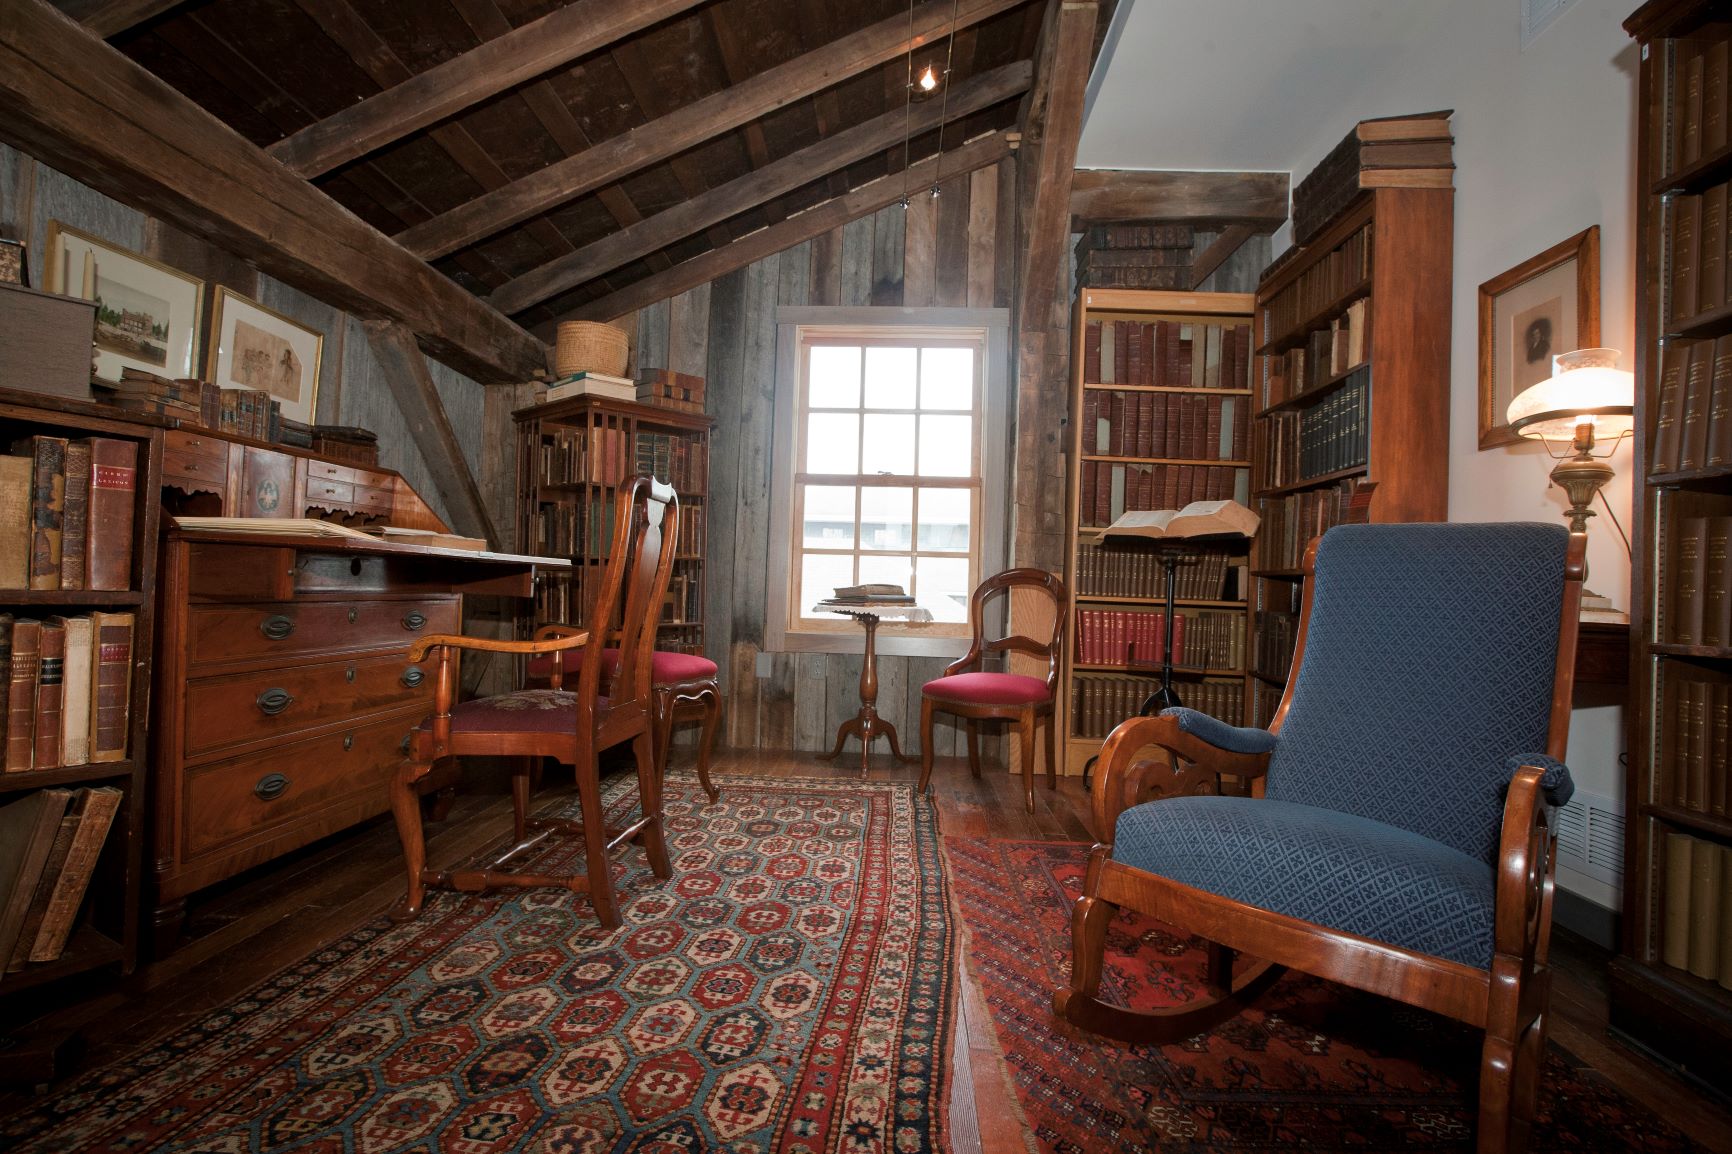 historic books and furniture